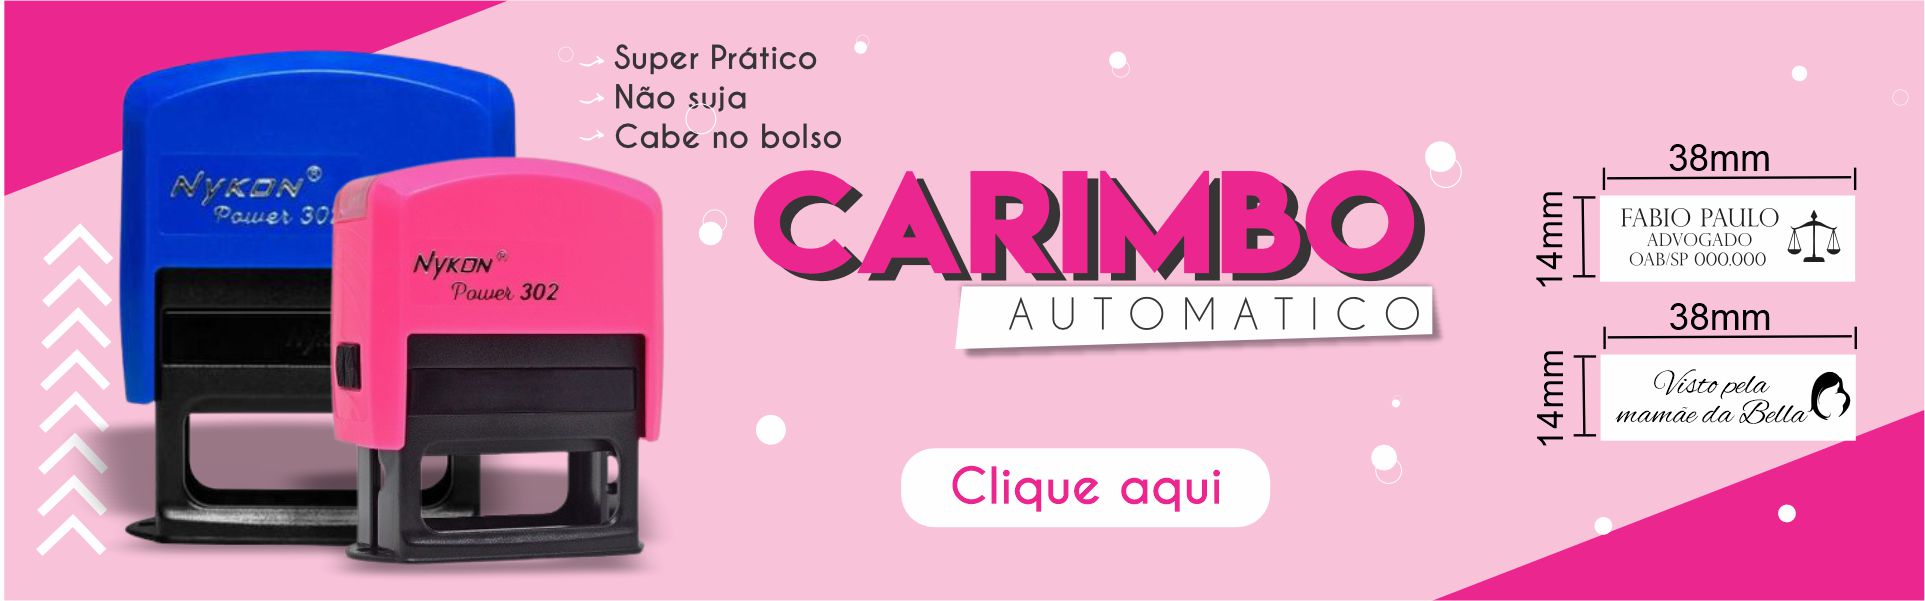 carimbo